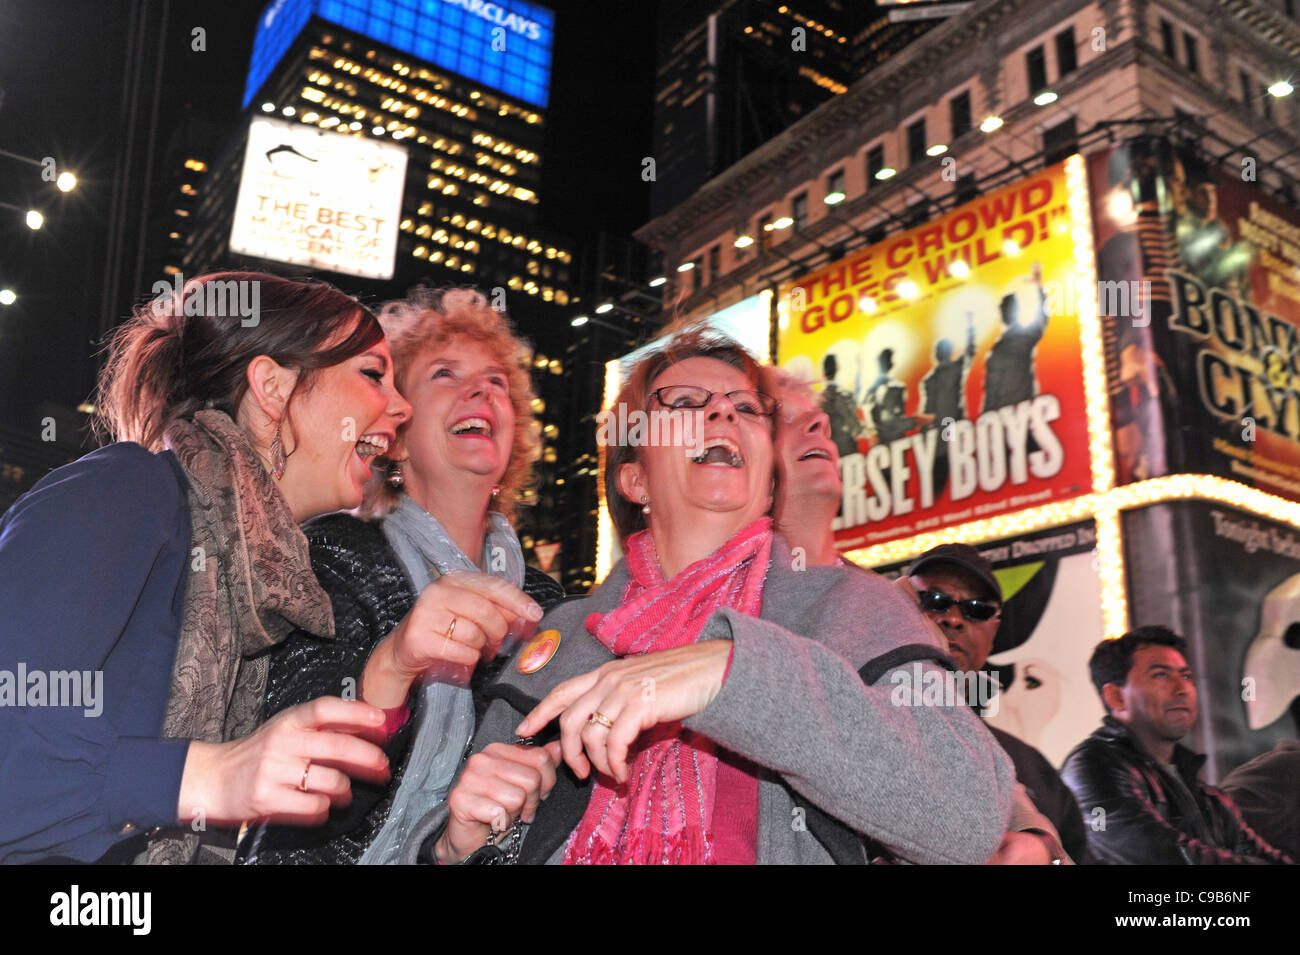 Group of women friends sightseeing having fun Times Square Midtown Manhattan New York NYC USA America Stock Photo